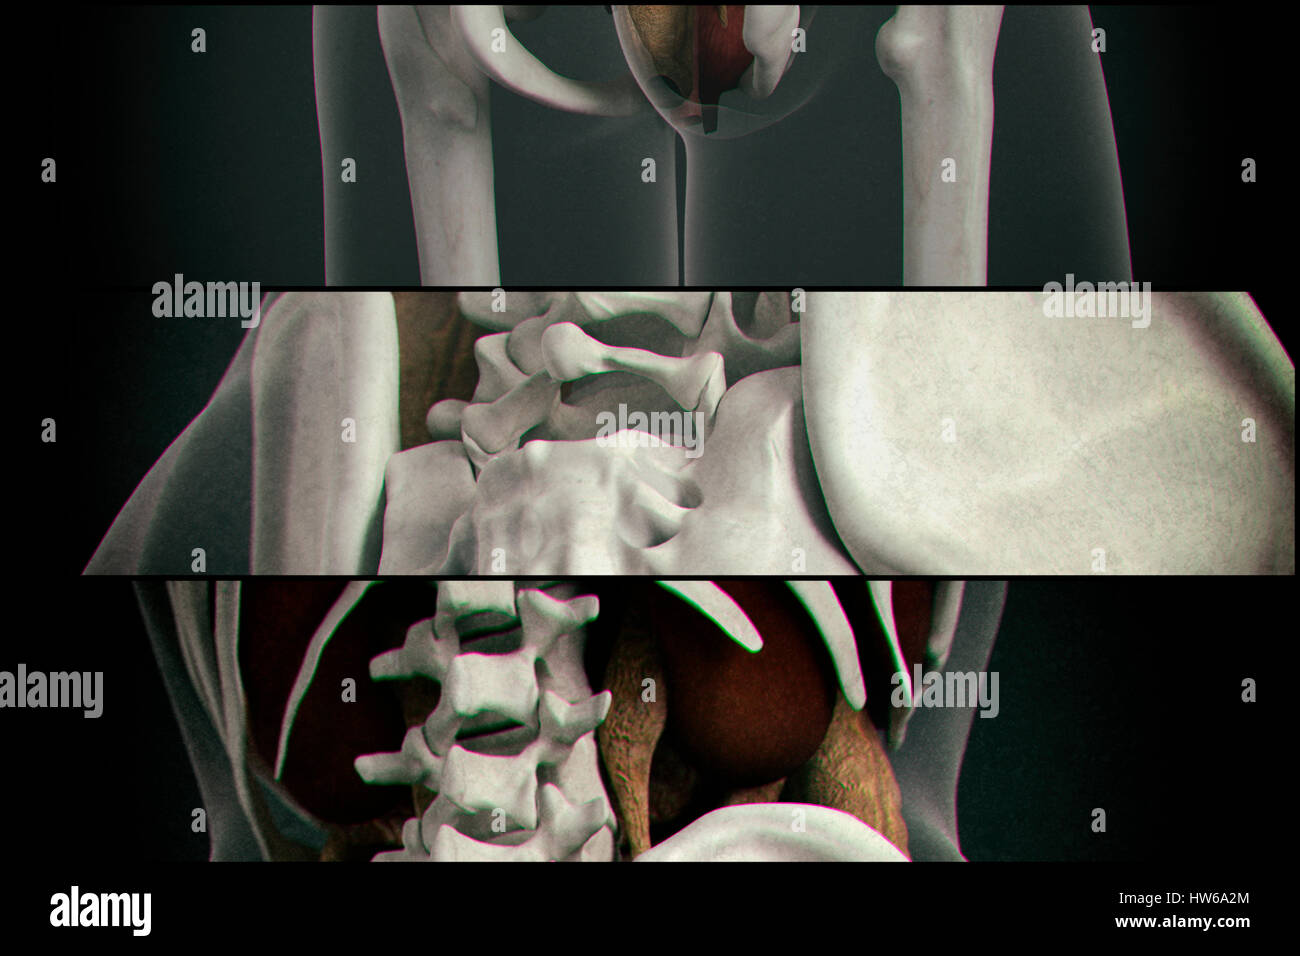 Human vertebrae, illustration. Stock Photo